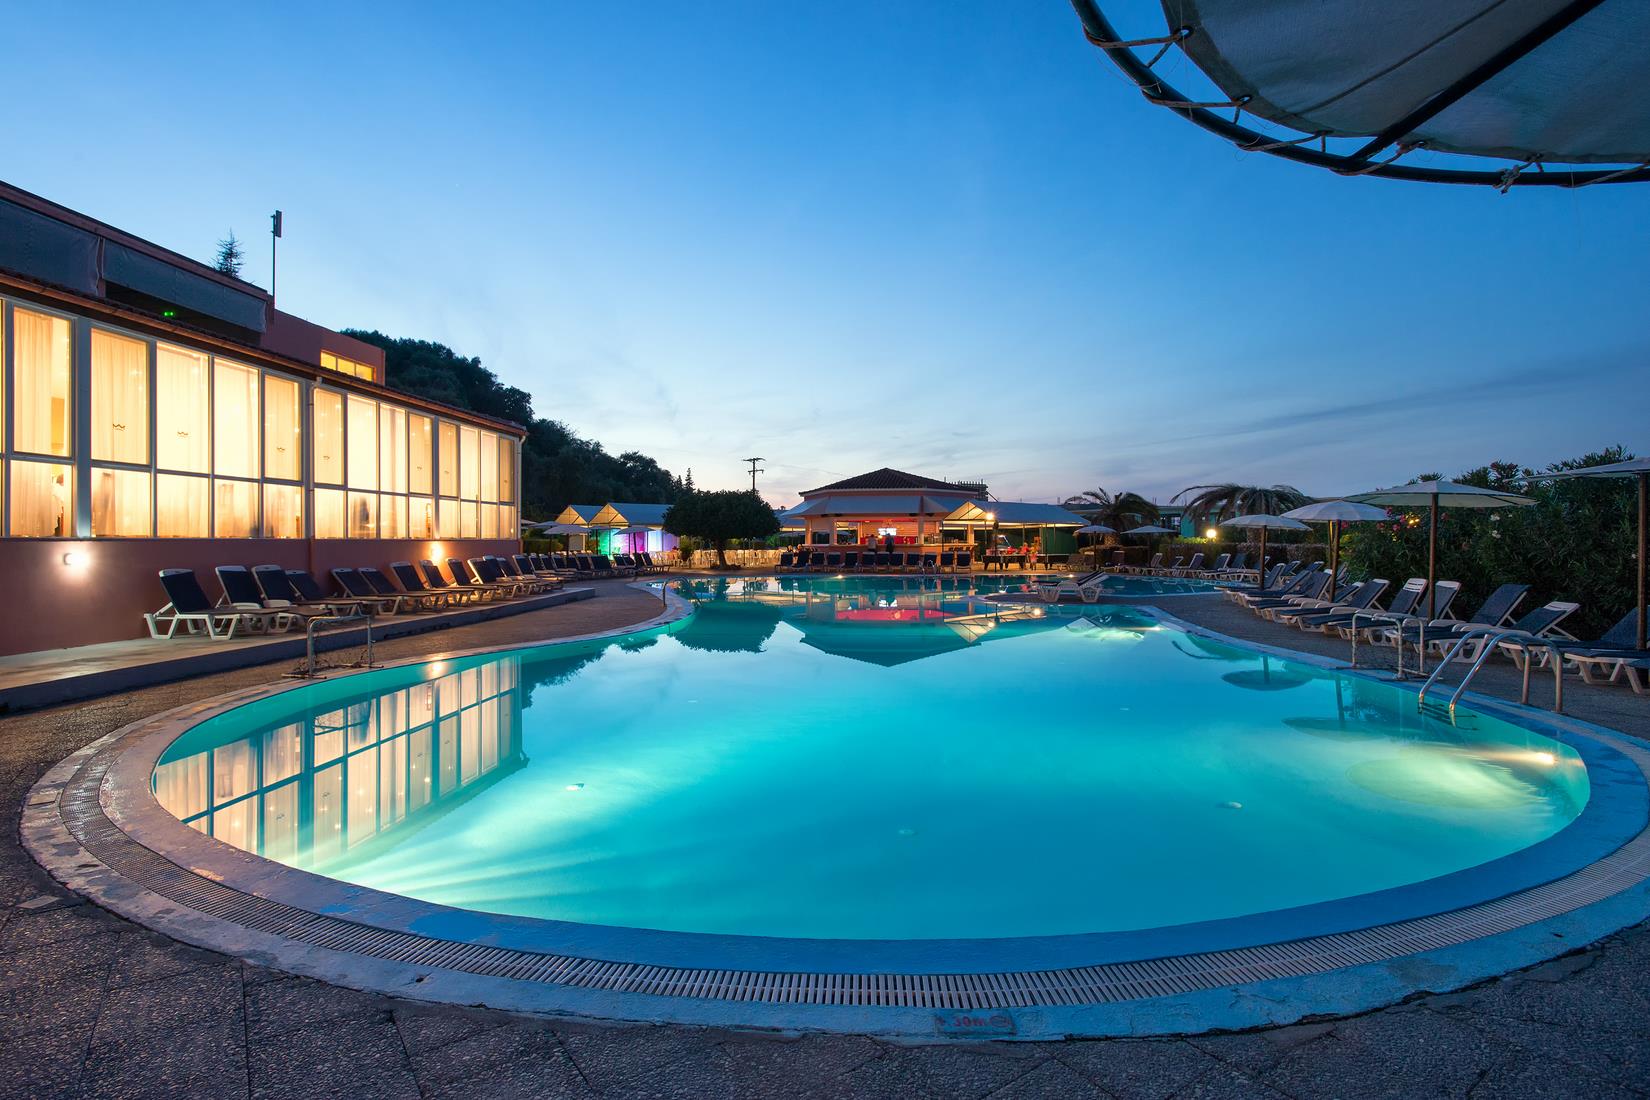 Hotel Sidari Panorama Resort - Κέρκυρα ✦ 2 Ημέρες (1 Διανυκτέρευση) ✦ 2 άτομα + 1 παιδί έως 12 ετών ✦ All Inclusive ✦ 09/05/2022 έως 30/09/2022 ✦ Κοντά στην Παραλία!